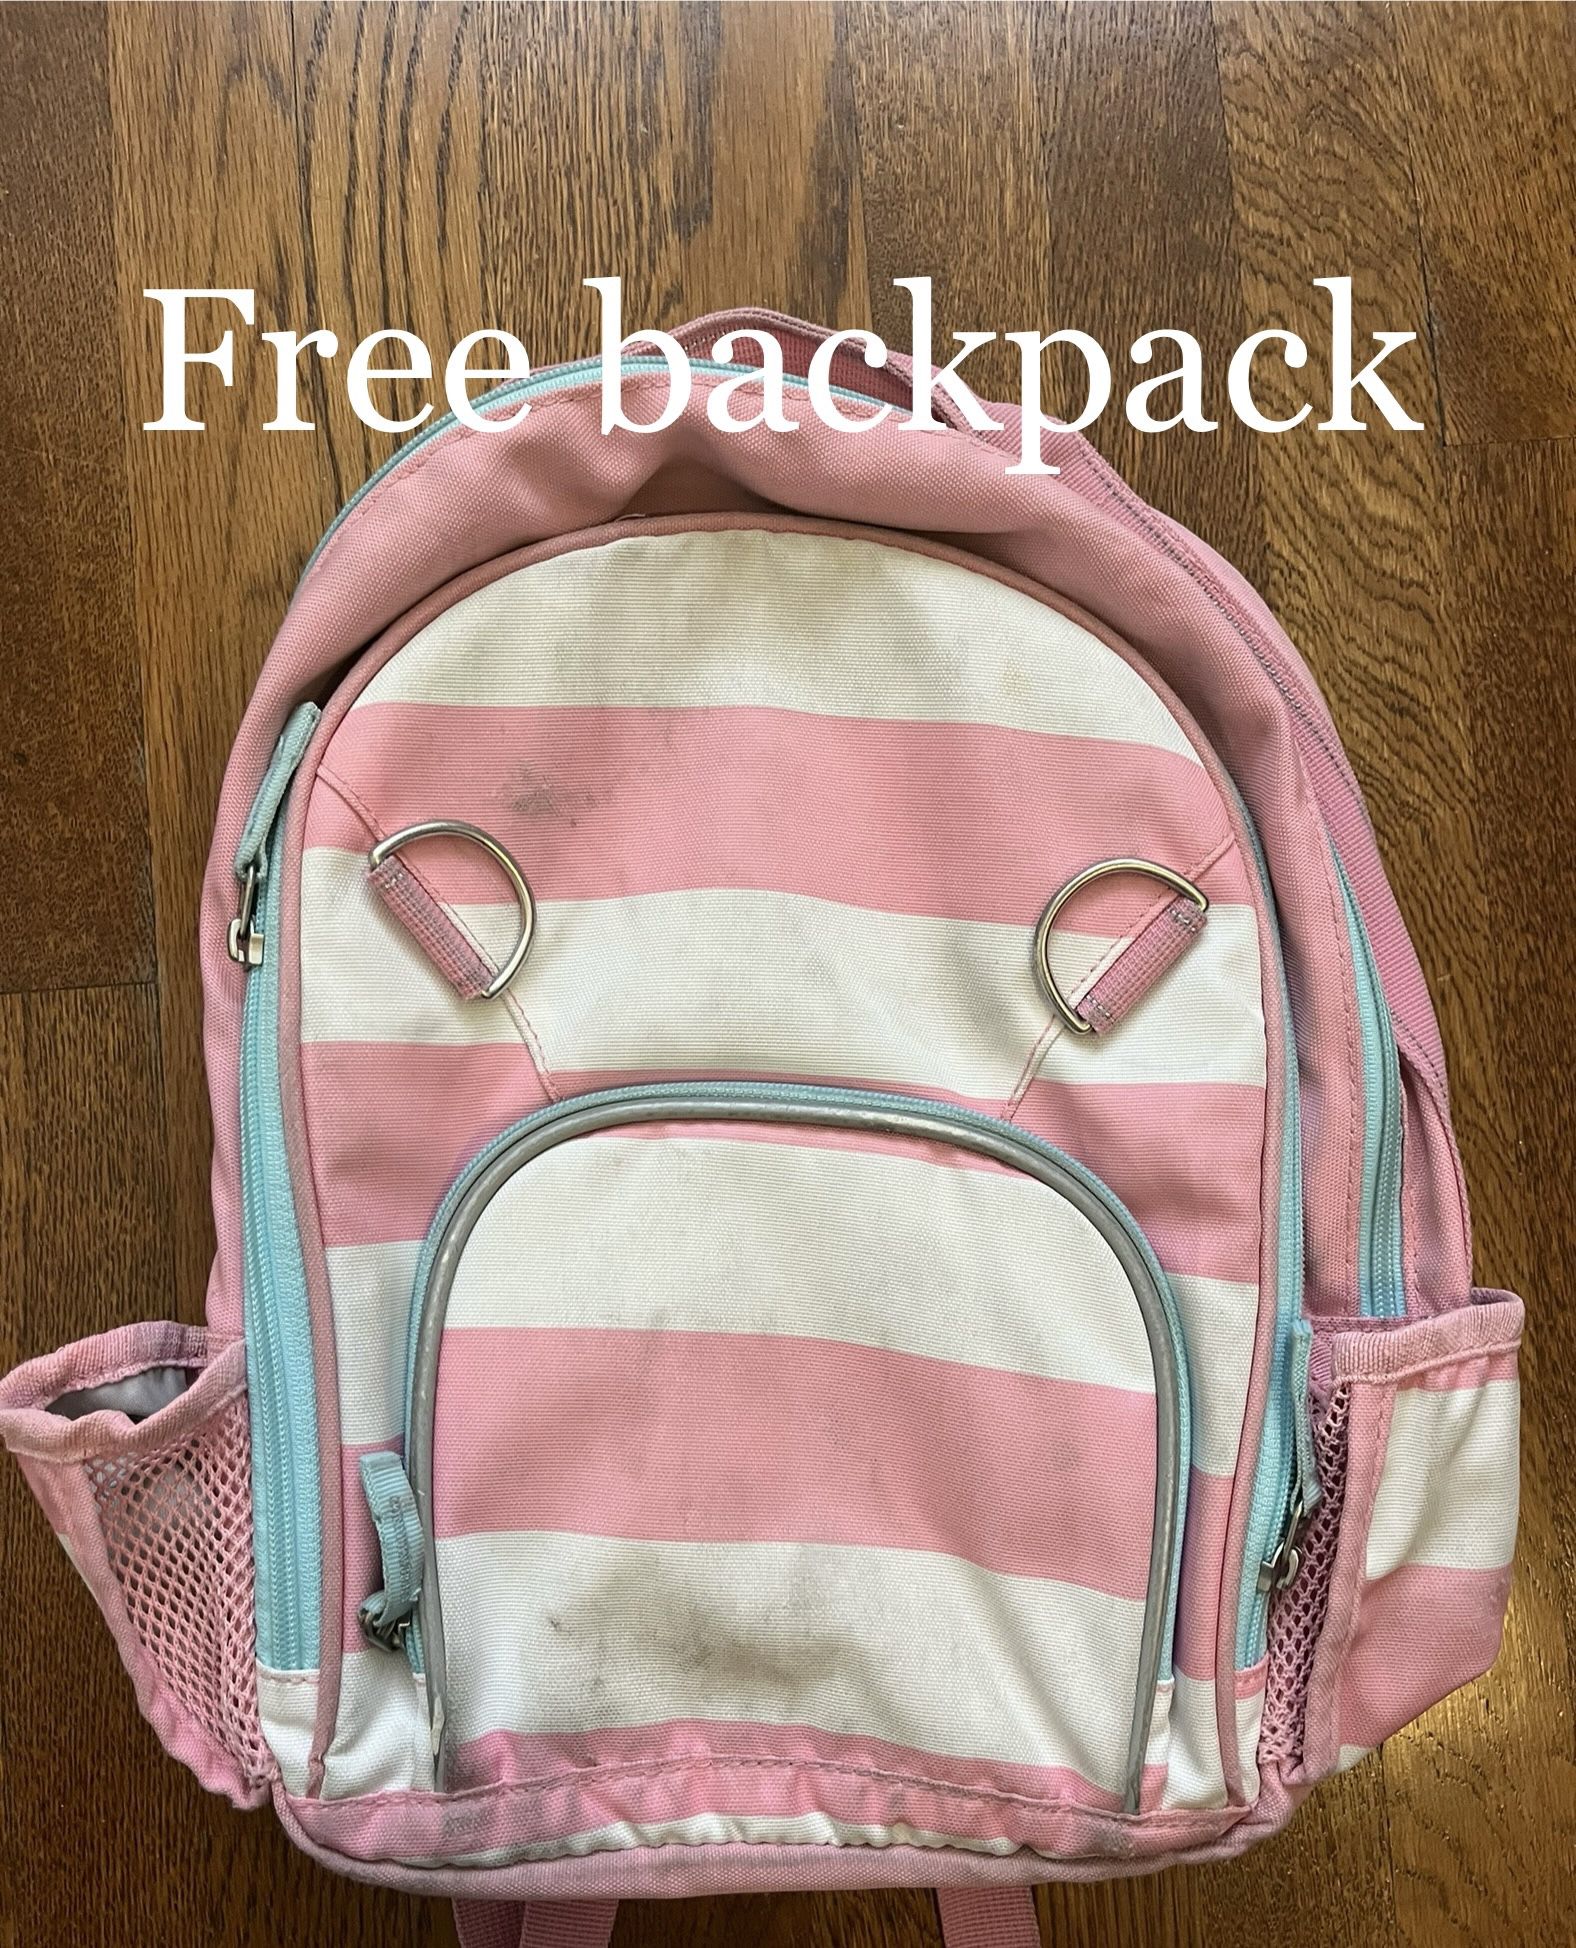 Free Used Kids Backpack